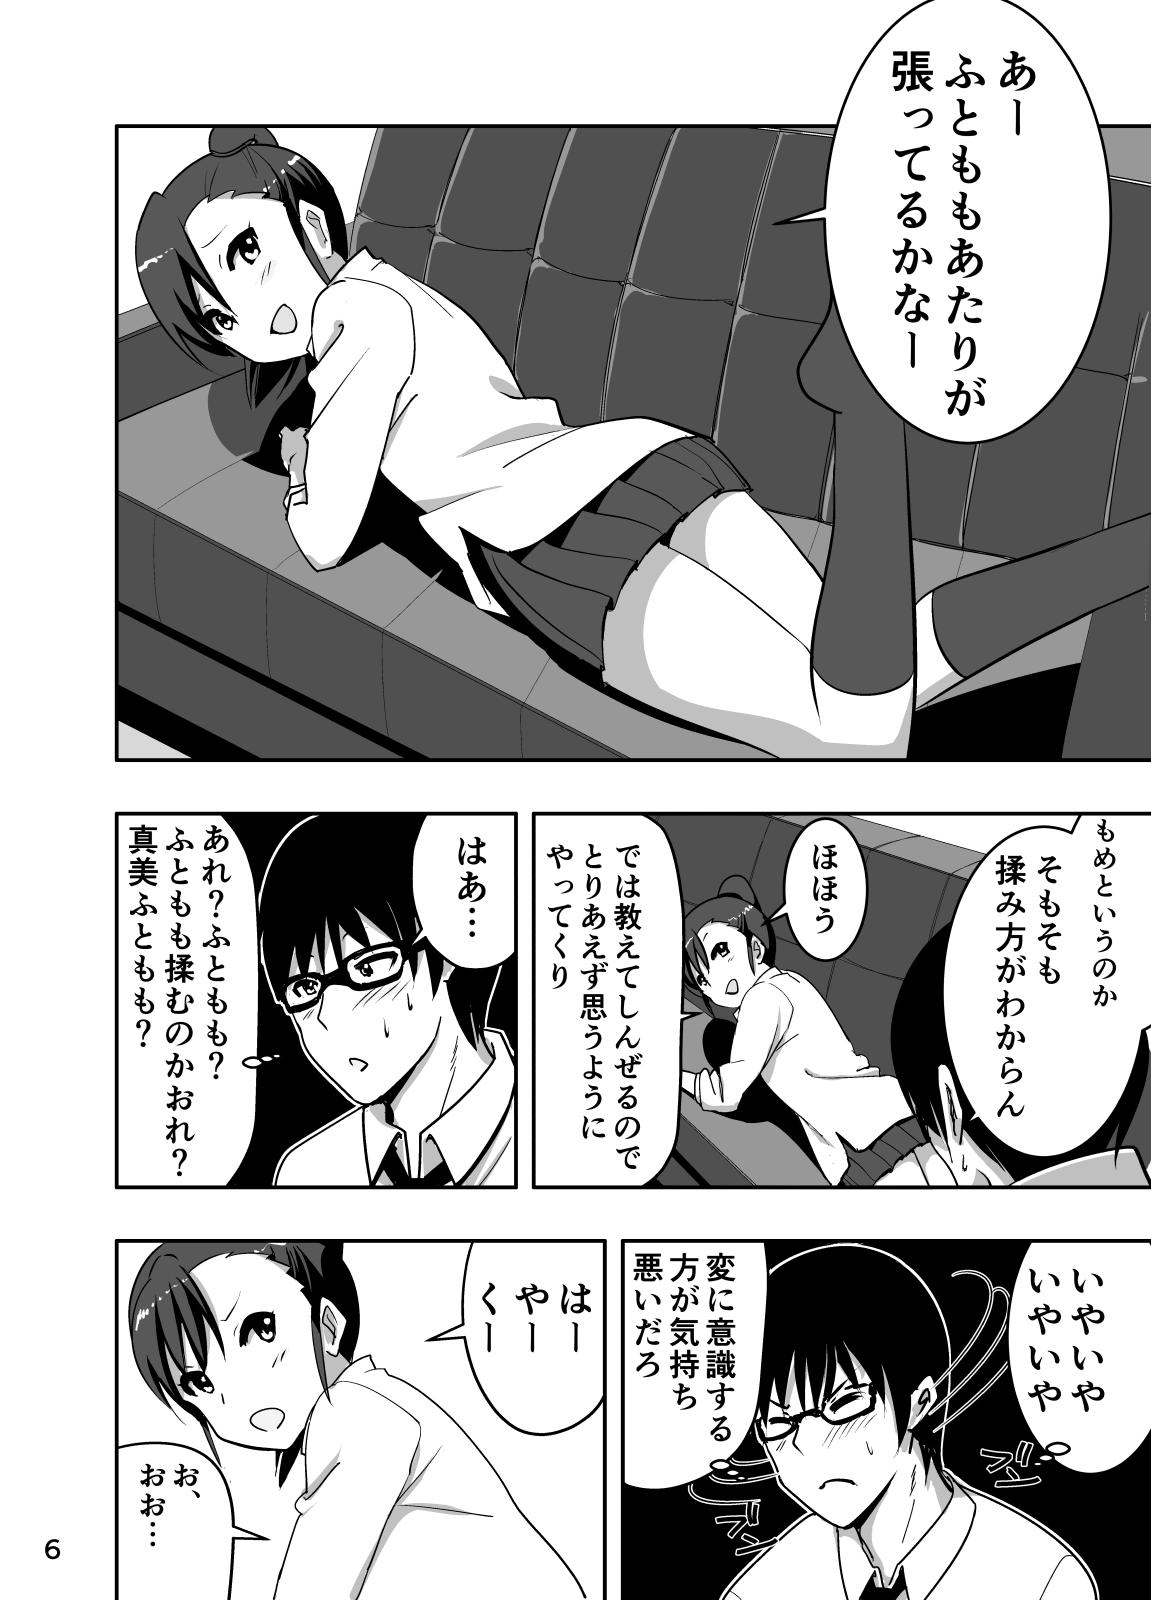 Mofos Mami Manga 3 - The idolmaster Cfnm - Page 6